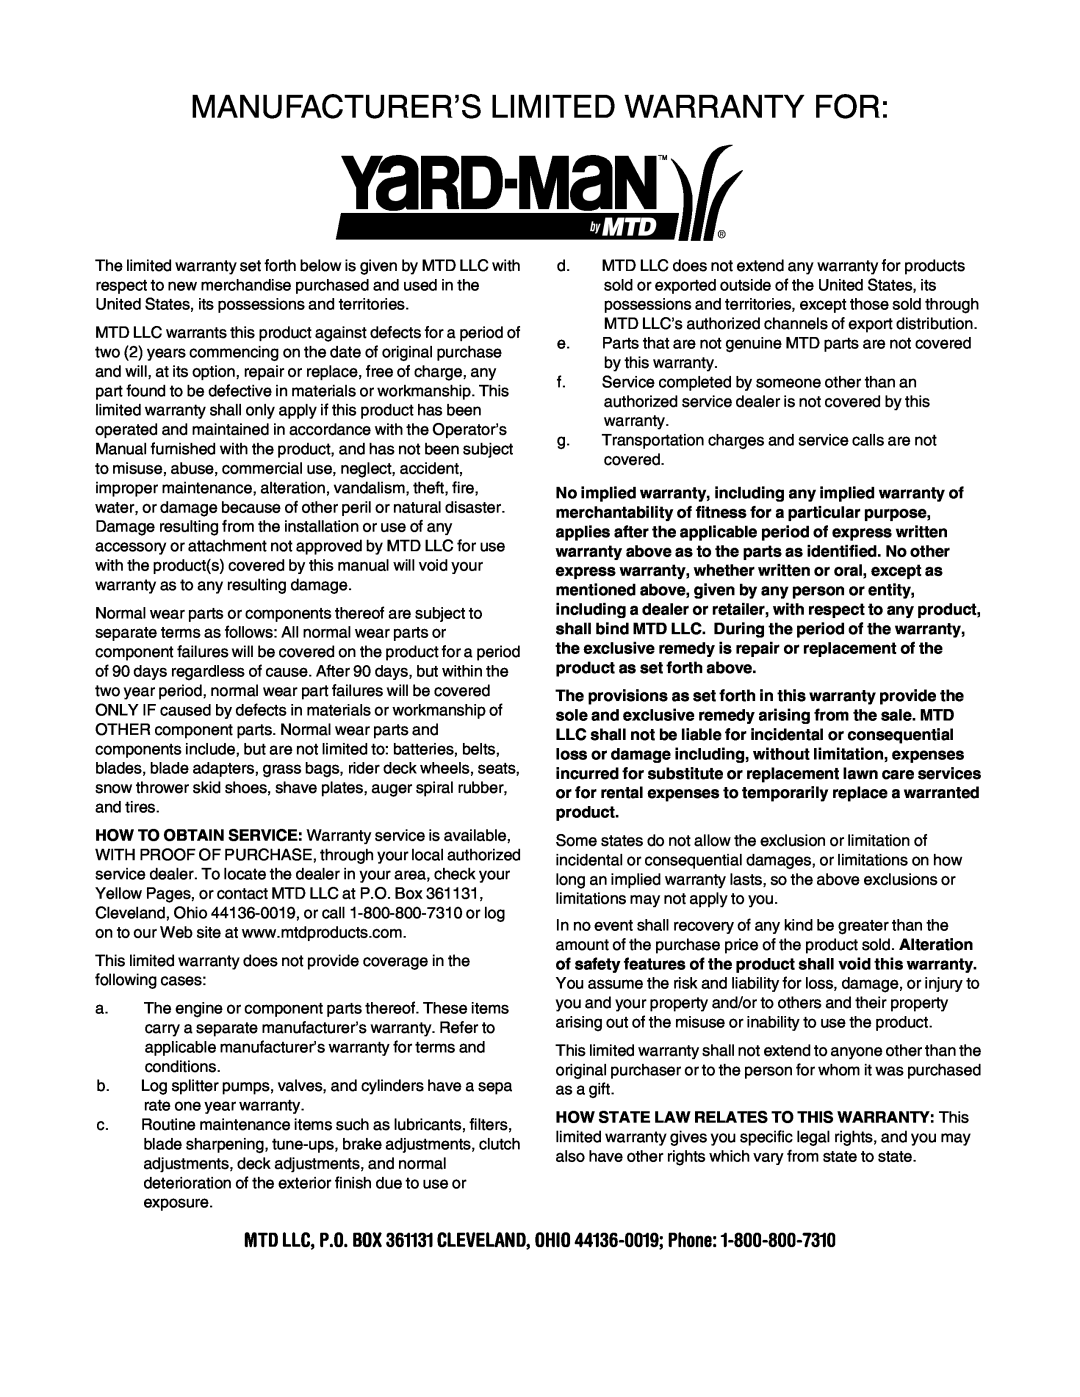 Yard-Man 106D manual Manufacturer’S Limited Warranty For 